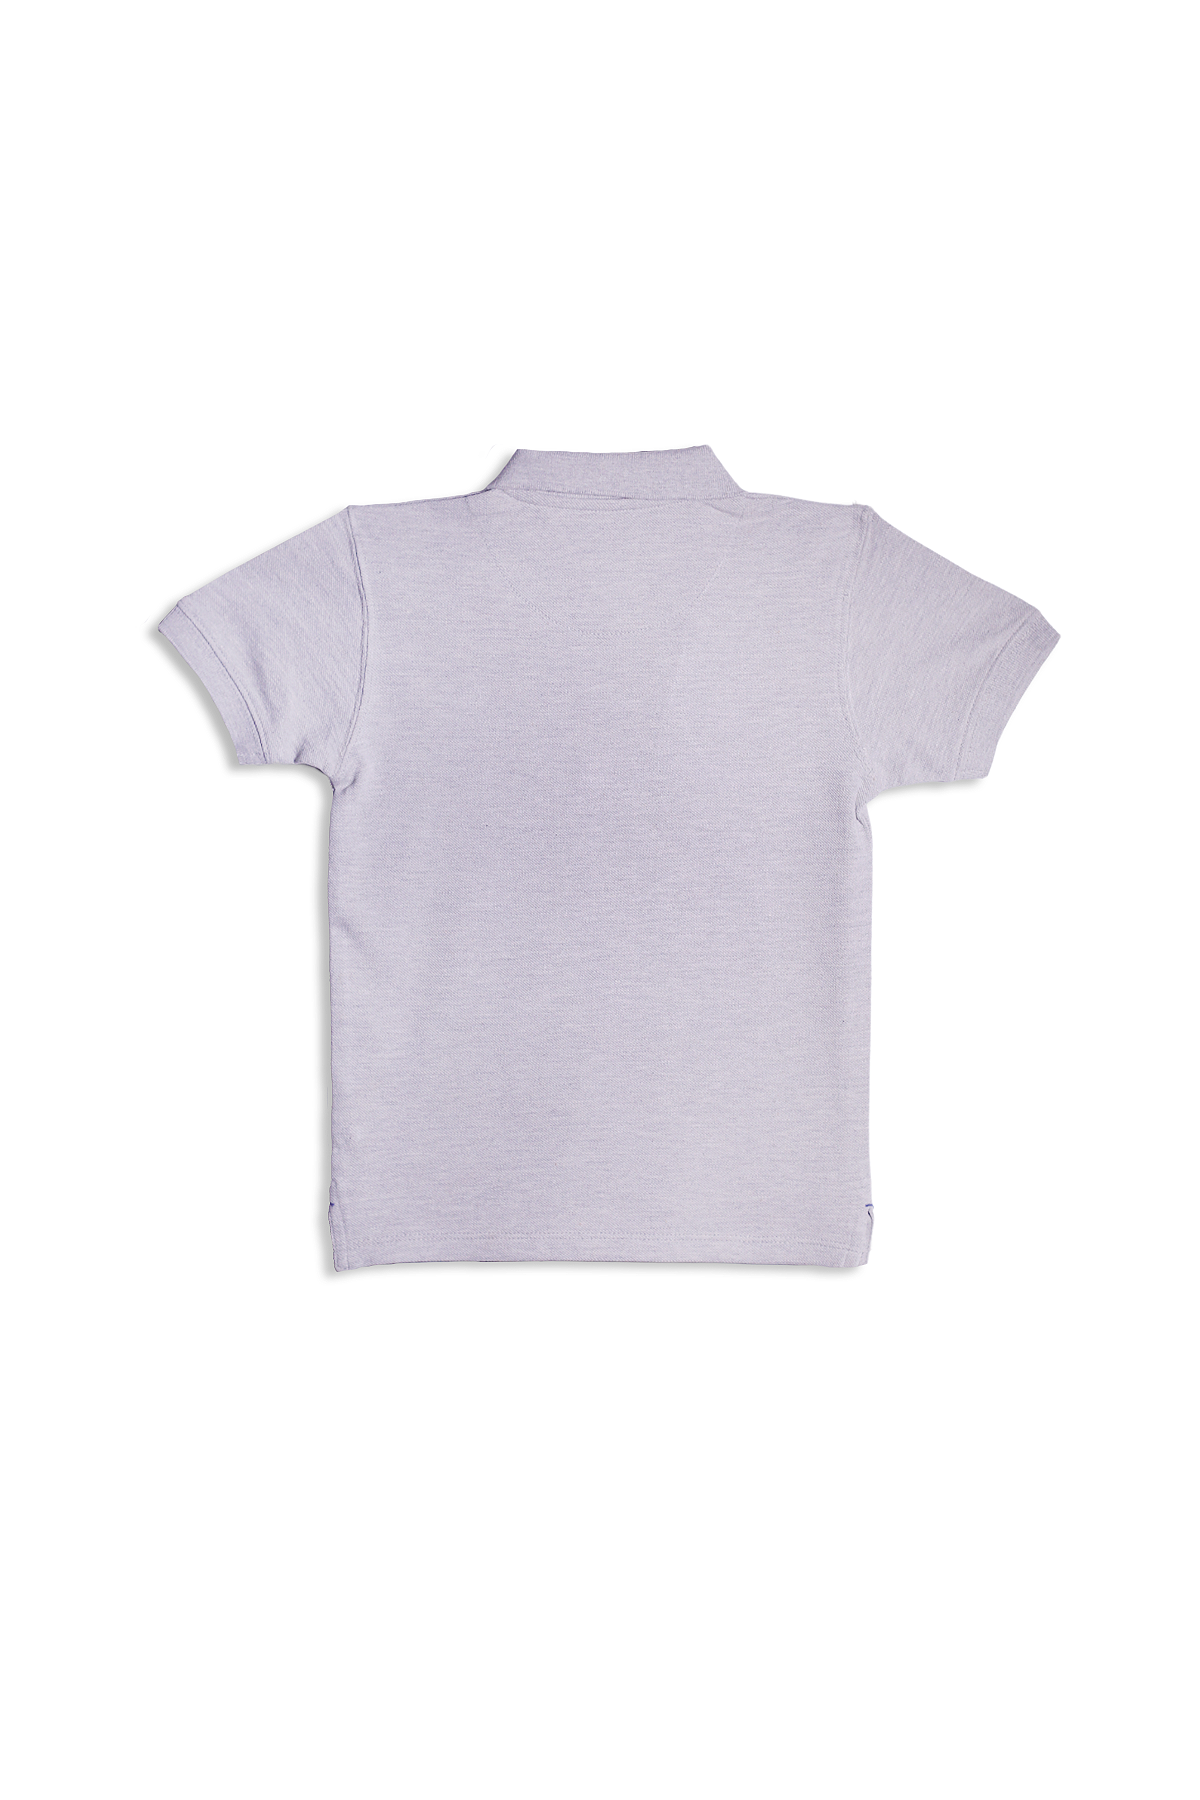 Short Sleeve Polo Shirt (MSBB-POLO-015)